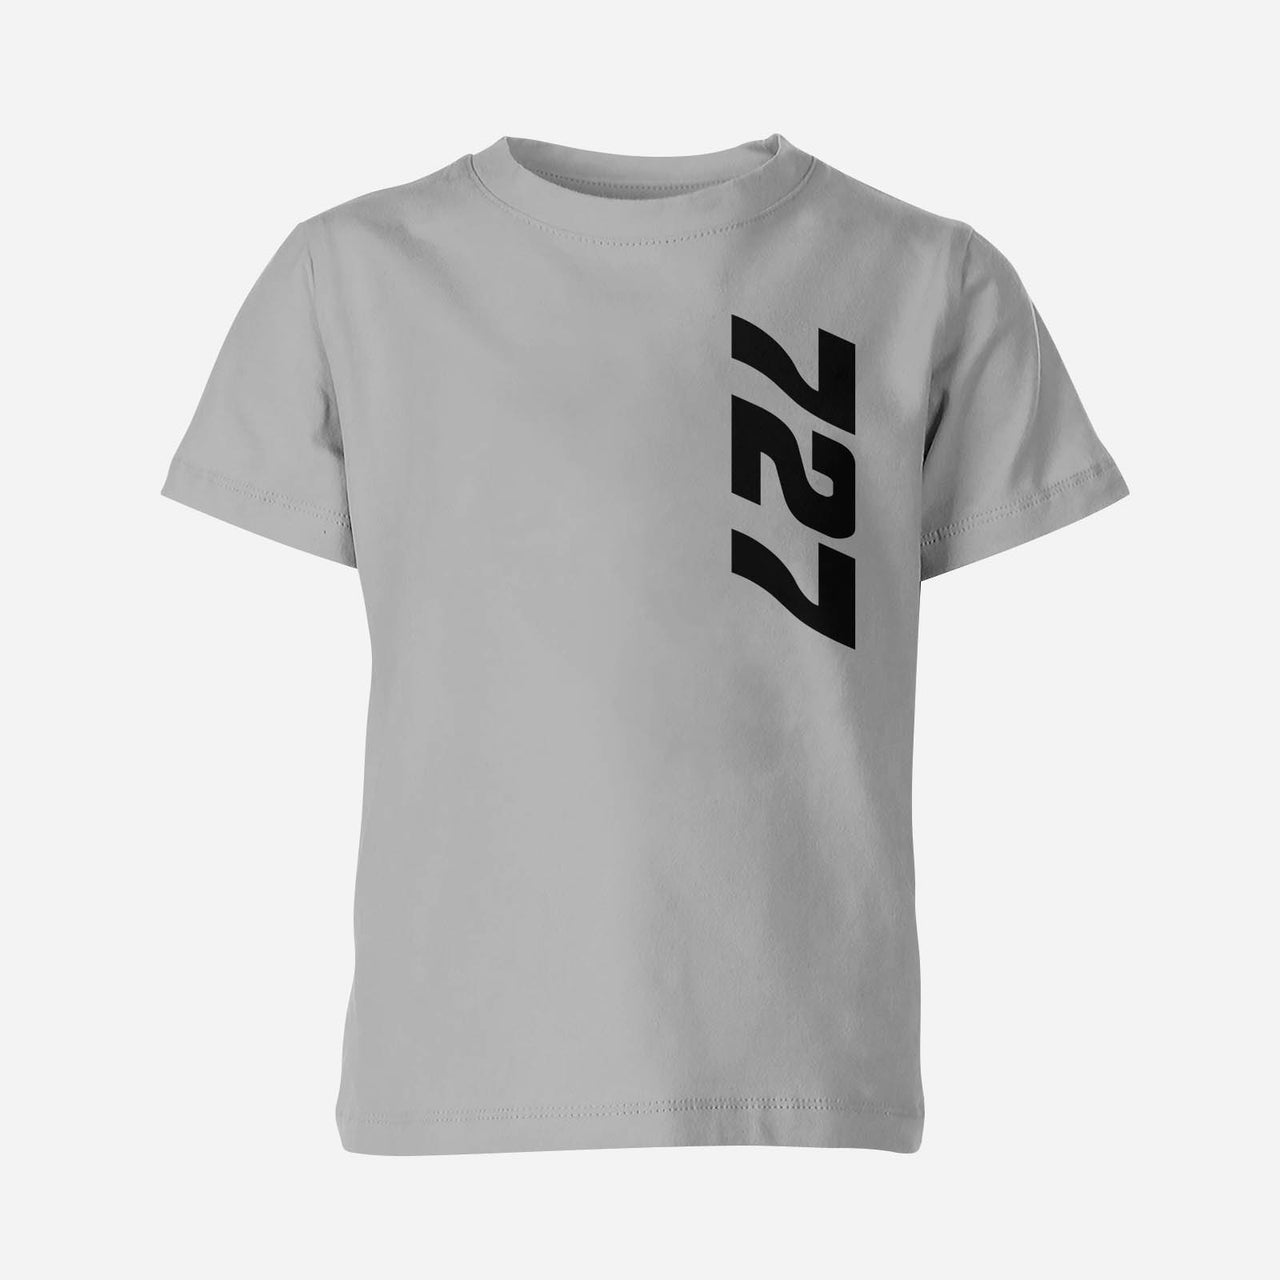 727 Side Text Designed Children T-Shirts